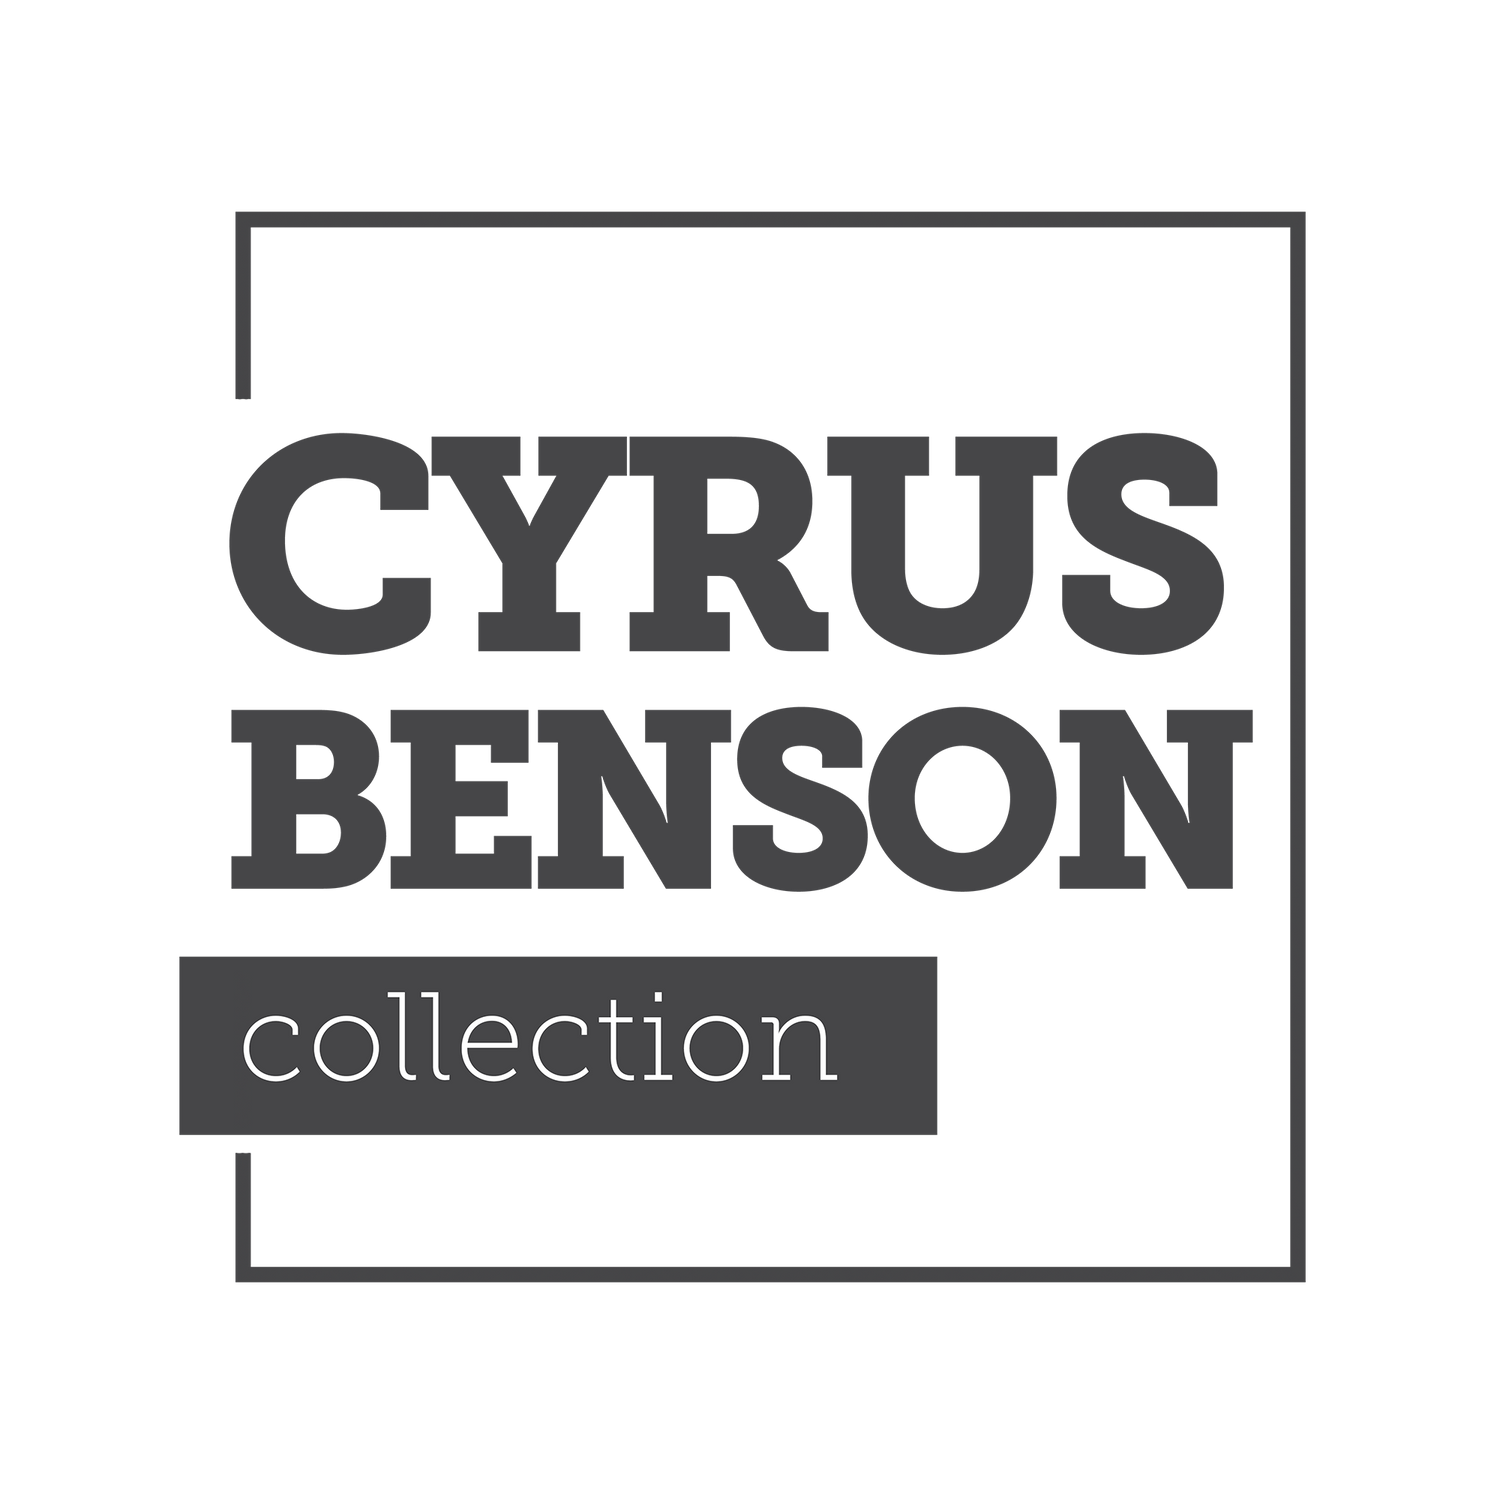 Cyrus Benson Collection